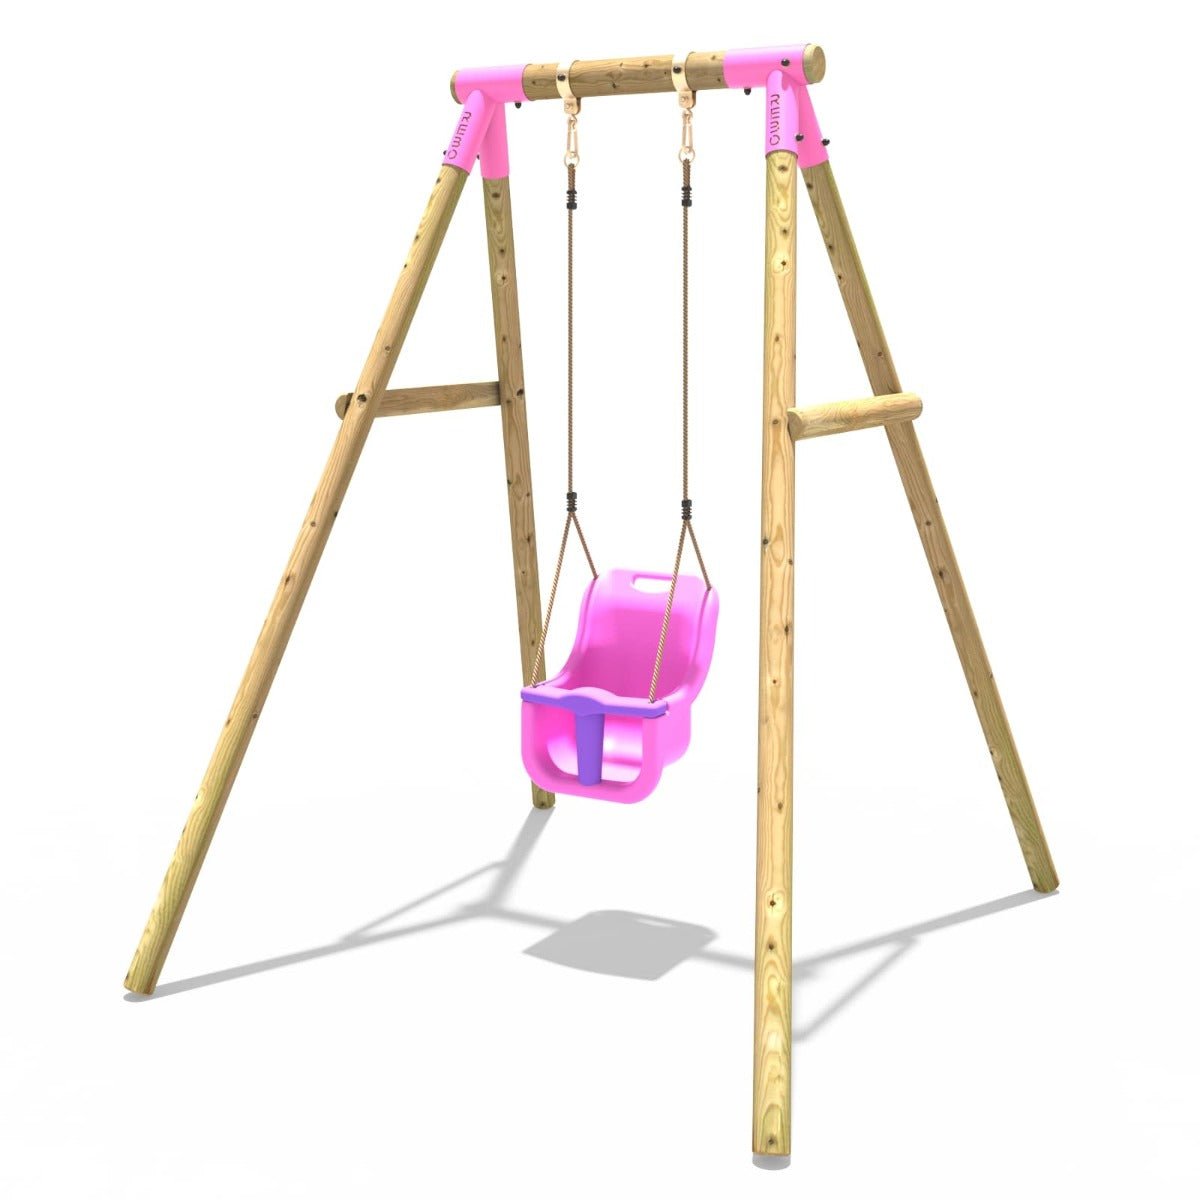 Rebo Wooden Garden Swing Sets - Pluto Pink